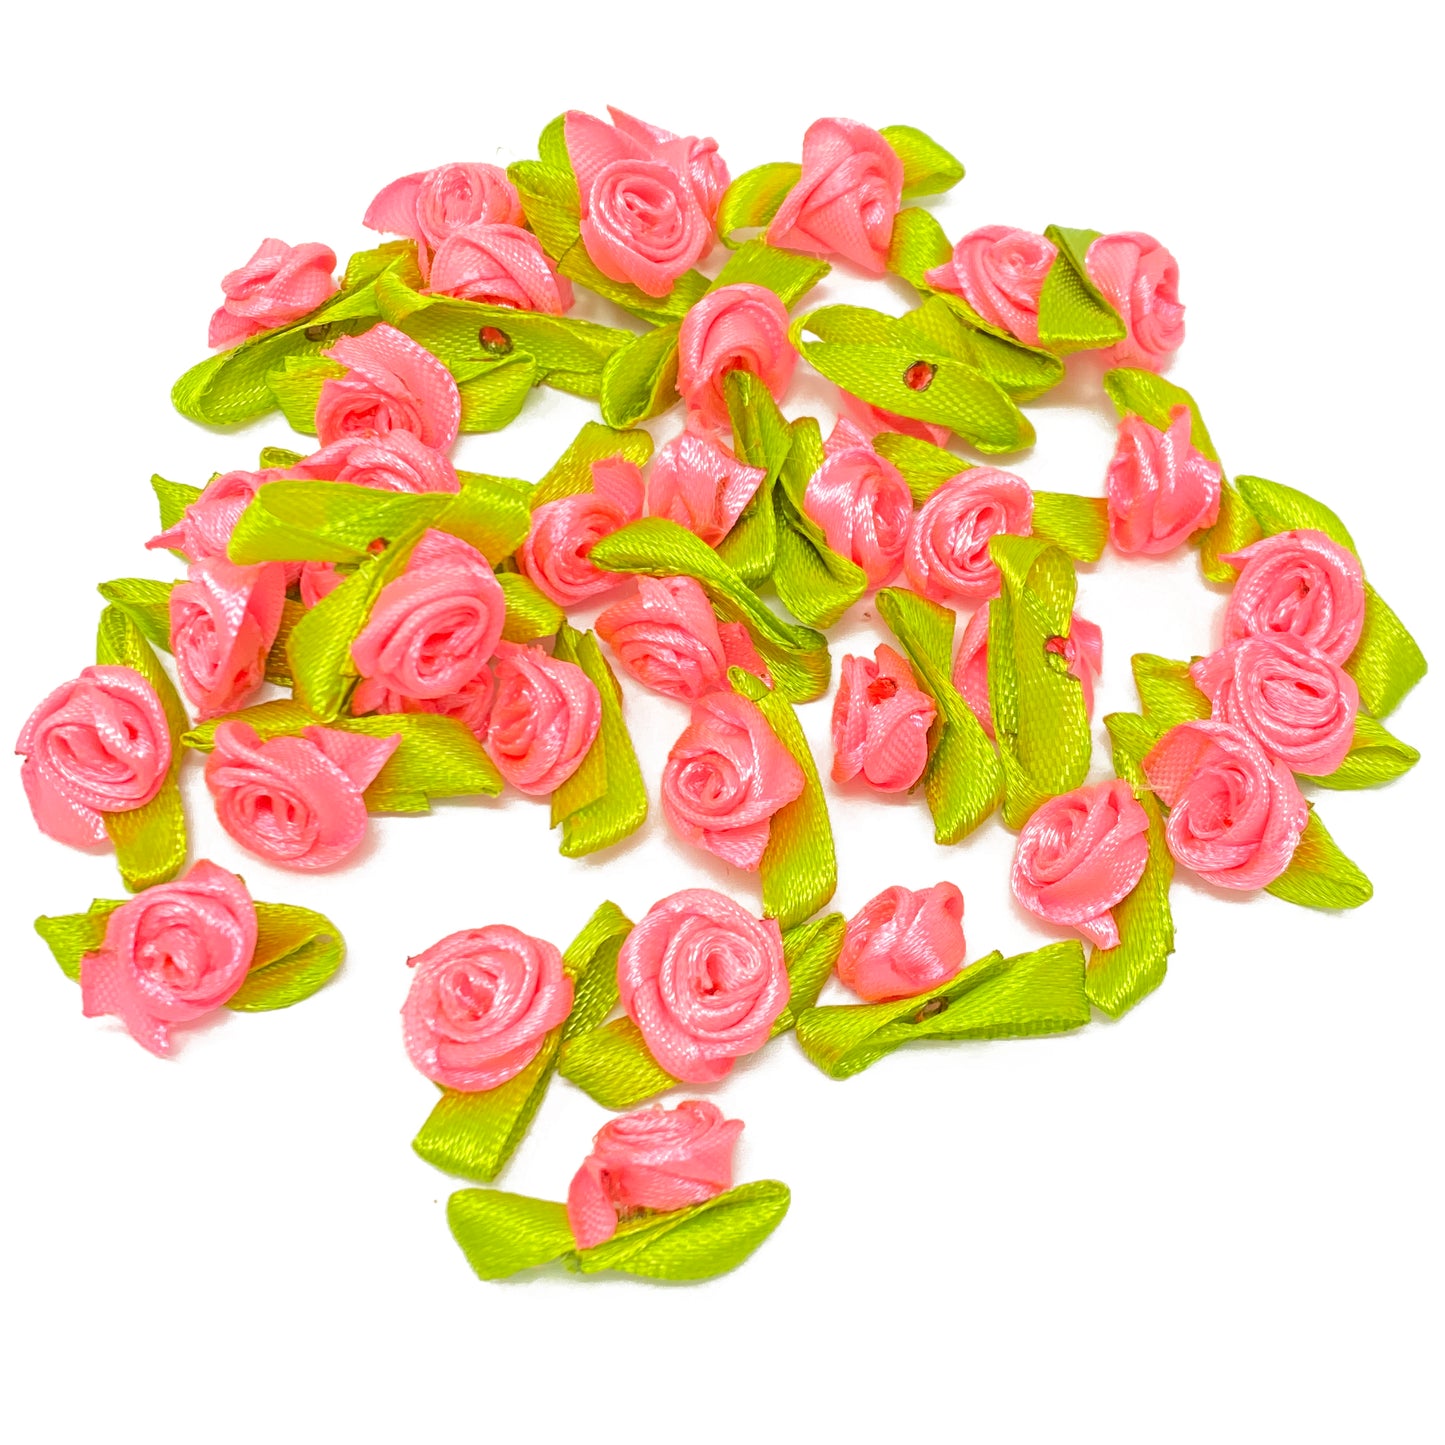 Flouro Pink Mini 15mm Rose Satin Ribbon Rose Buds With Base